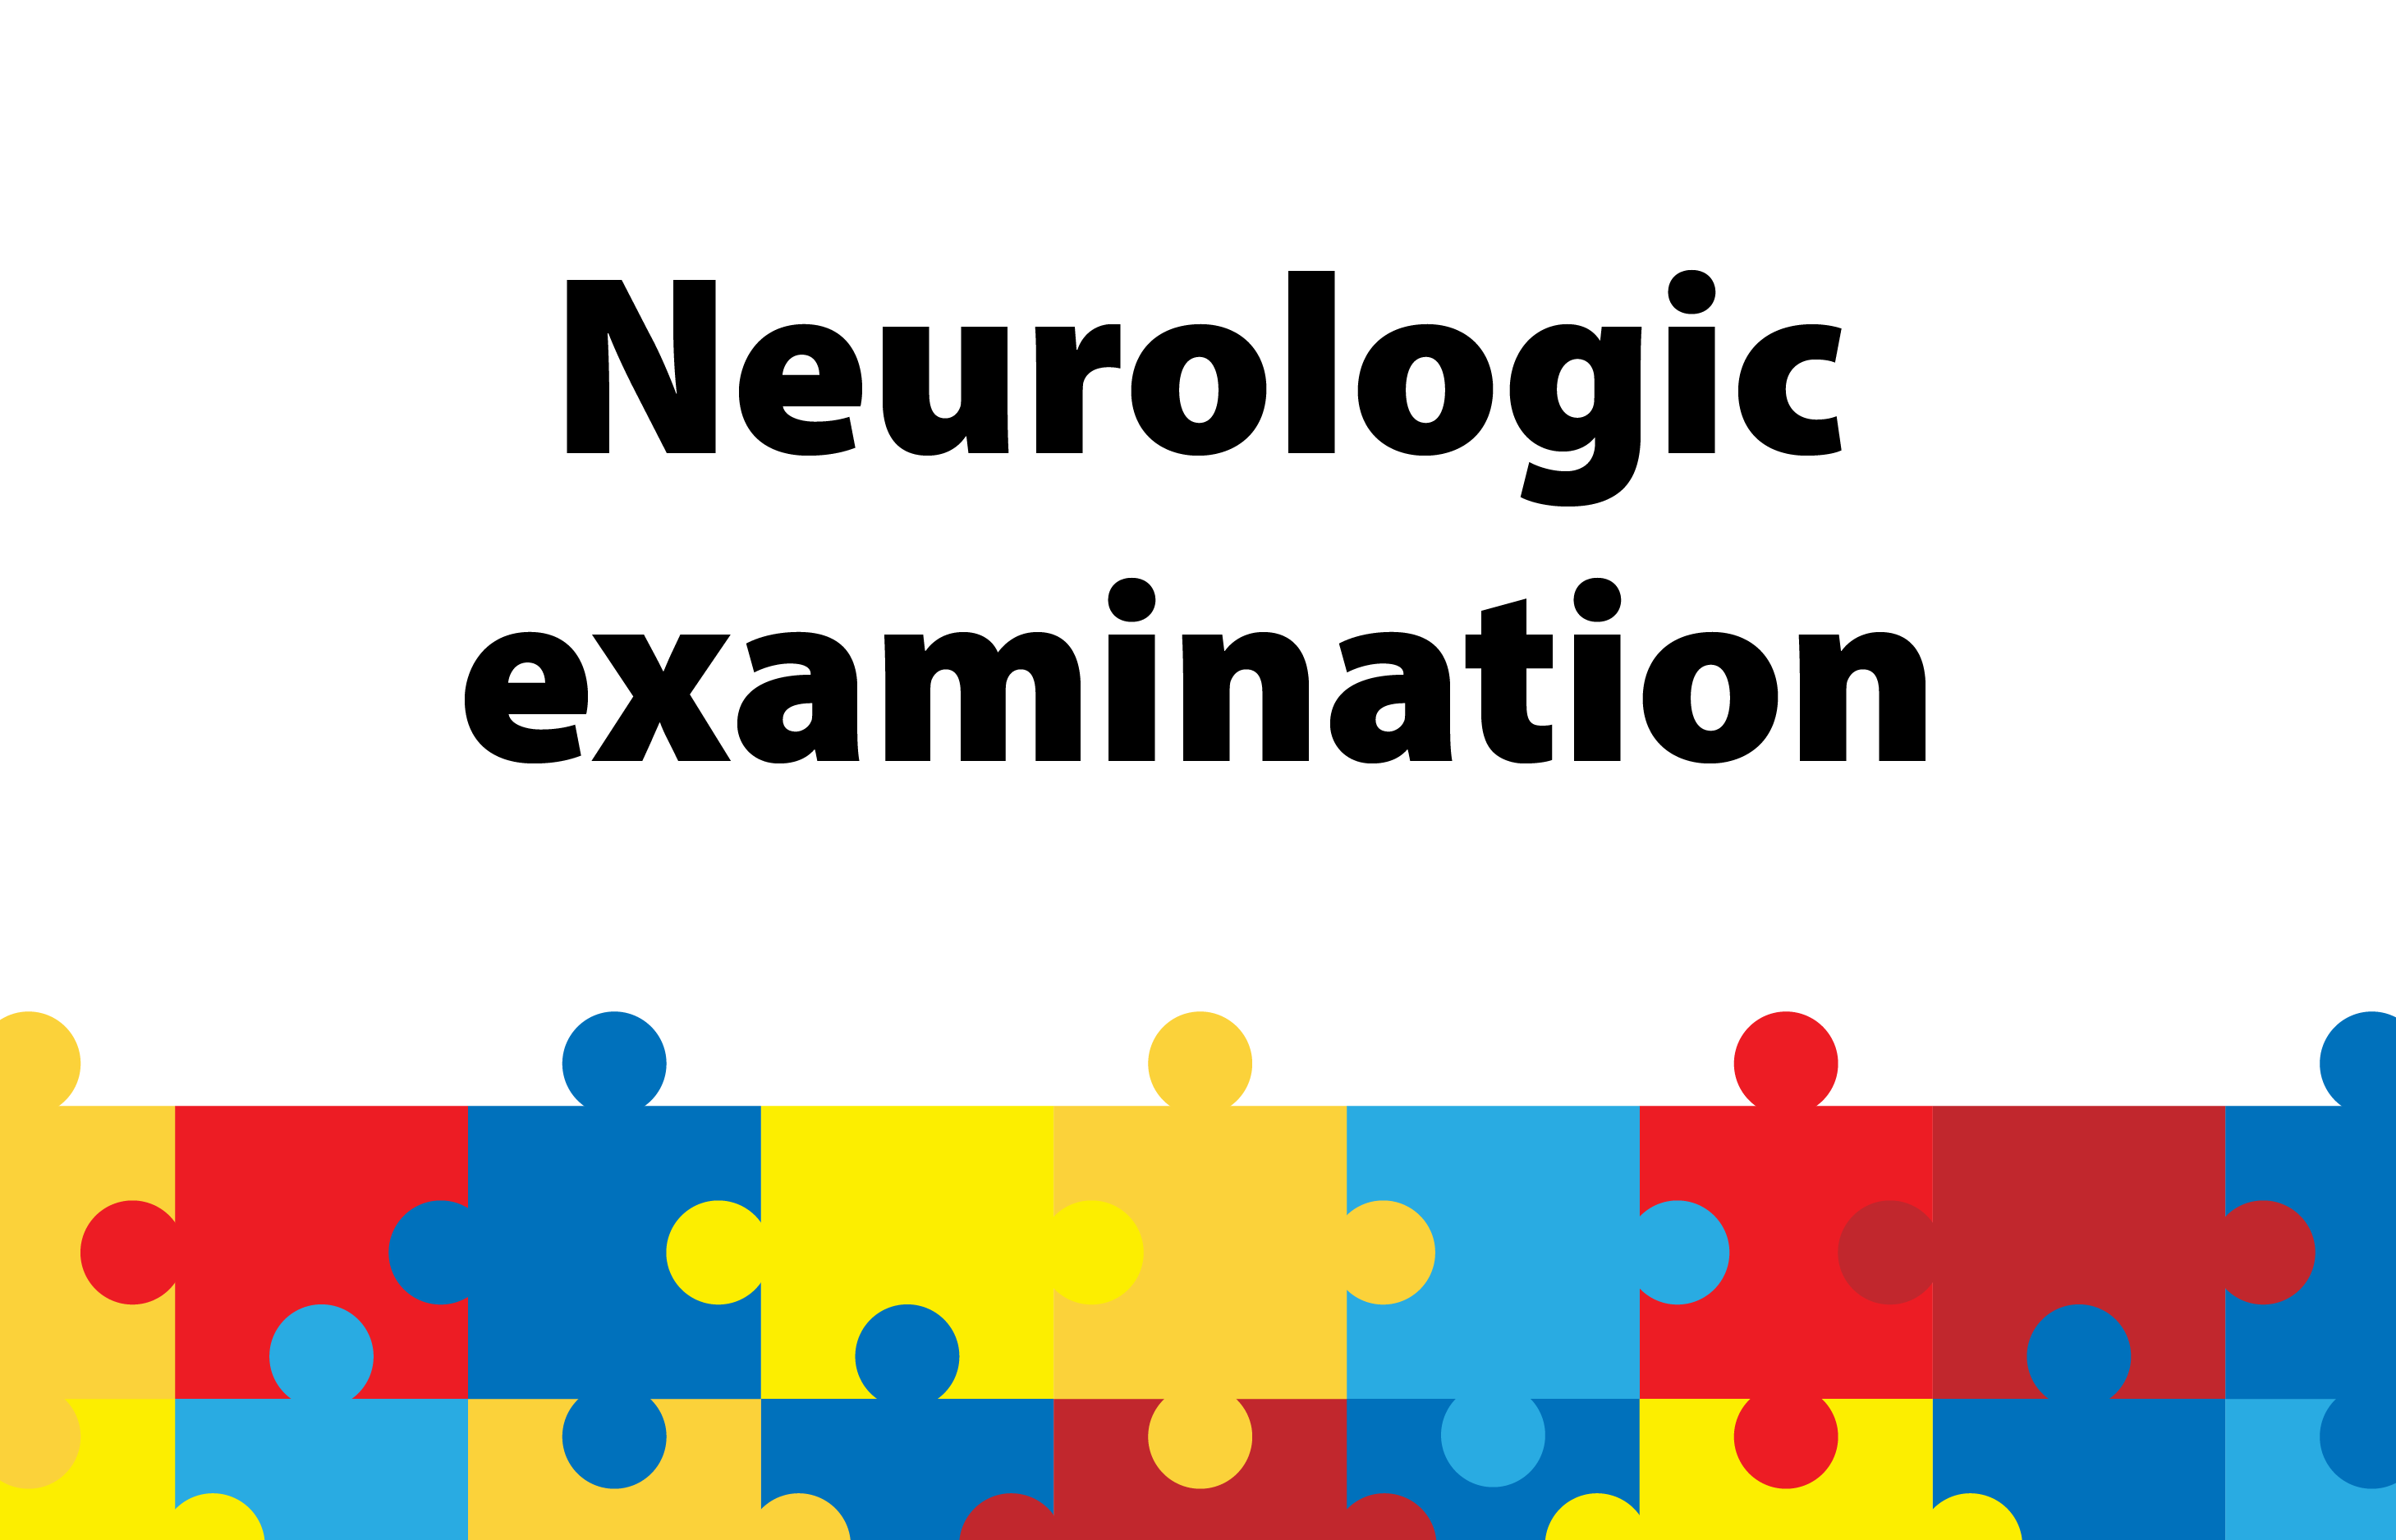 Neurologic examination